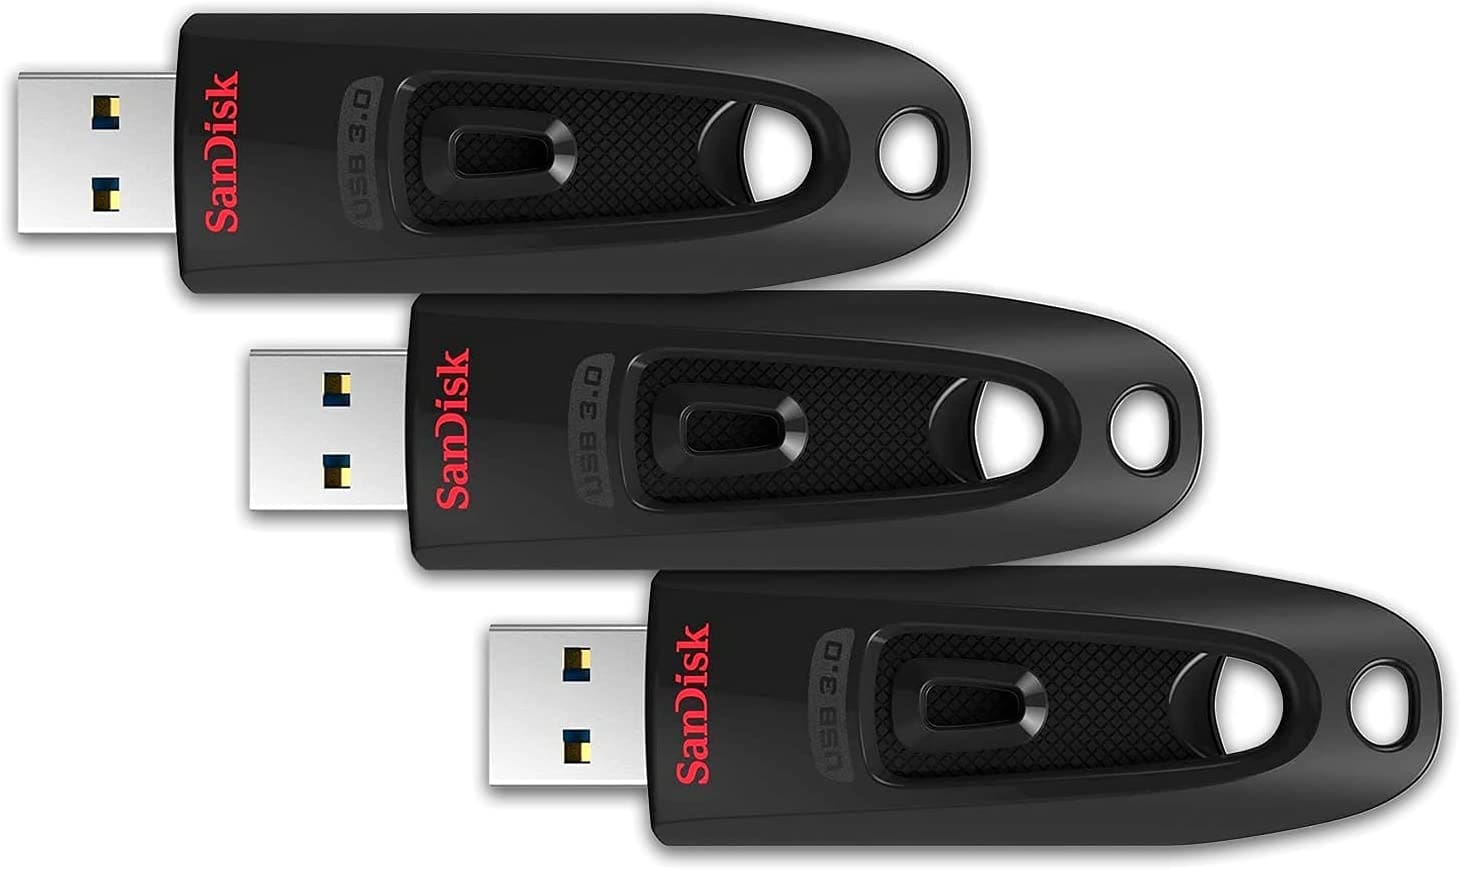 SanDisk 32 GB 3-Pack Ultra USB 3.0